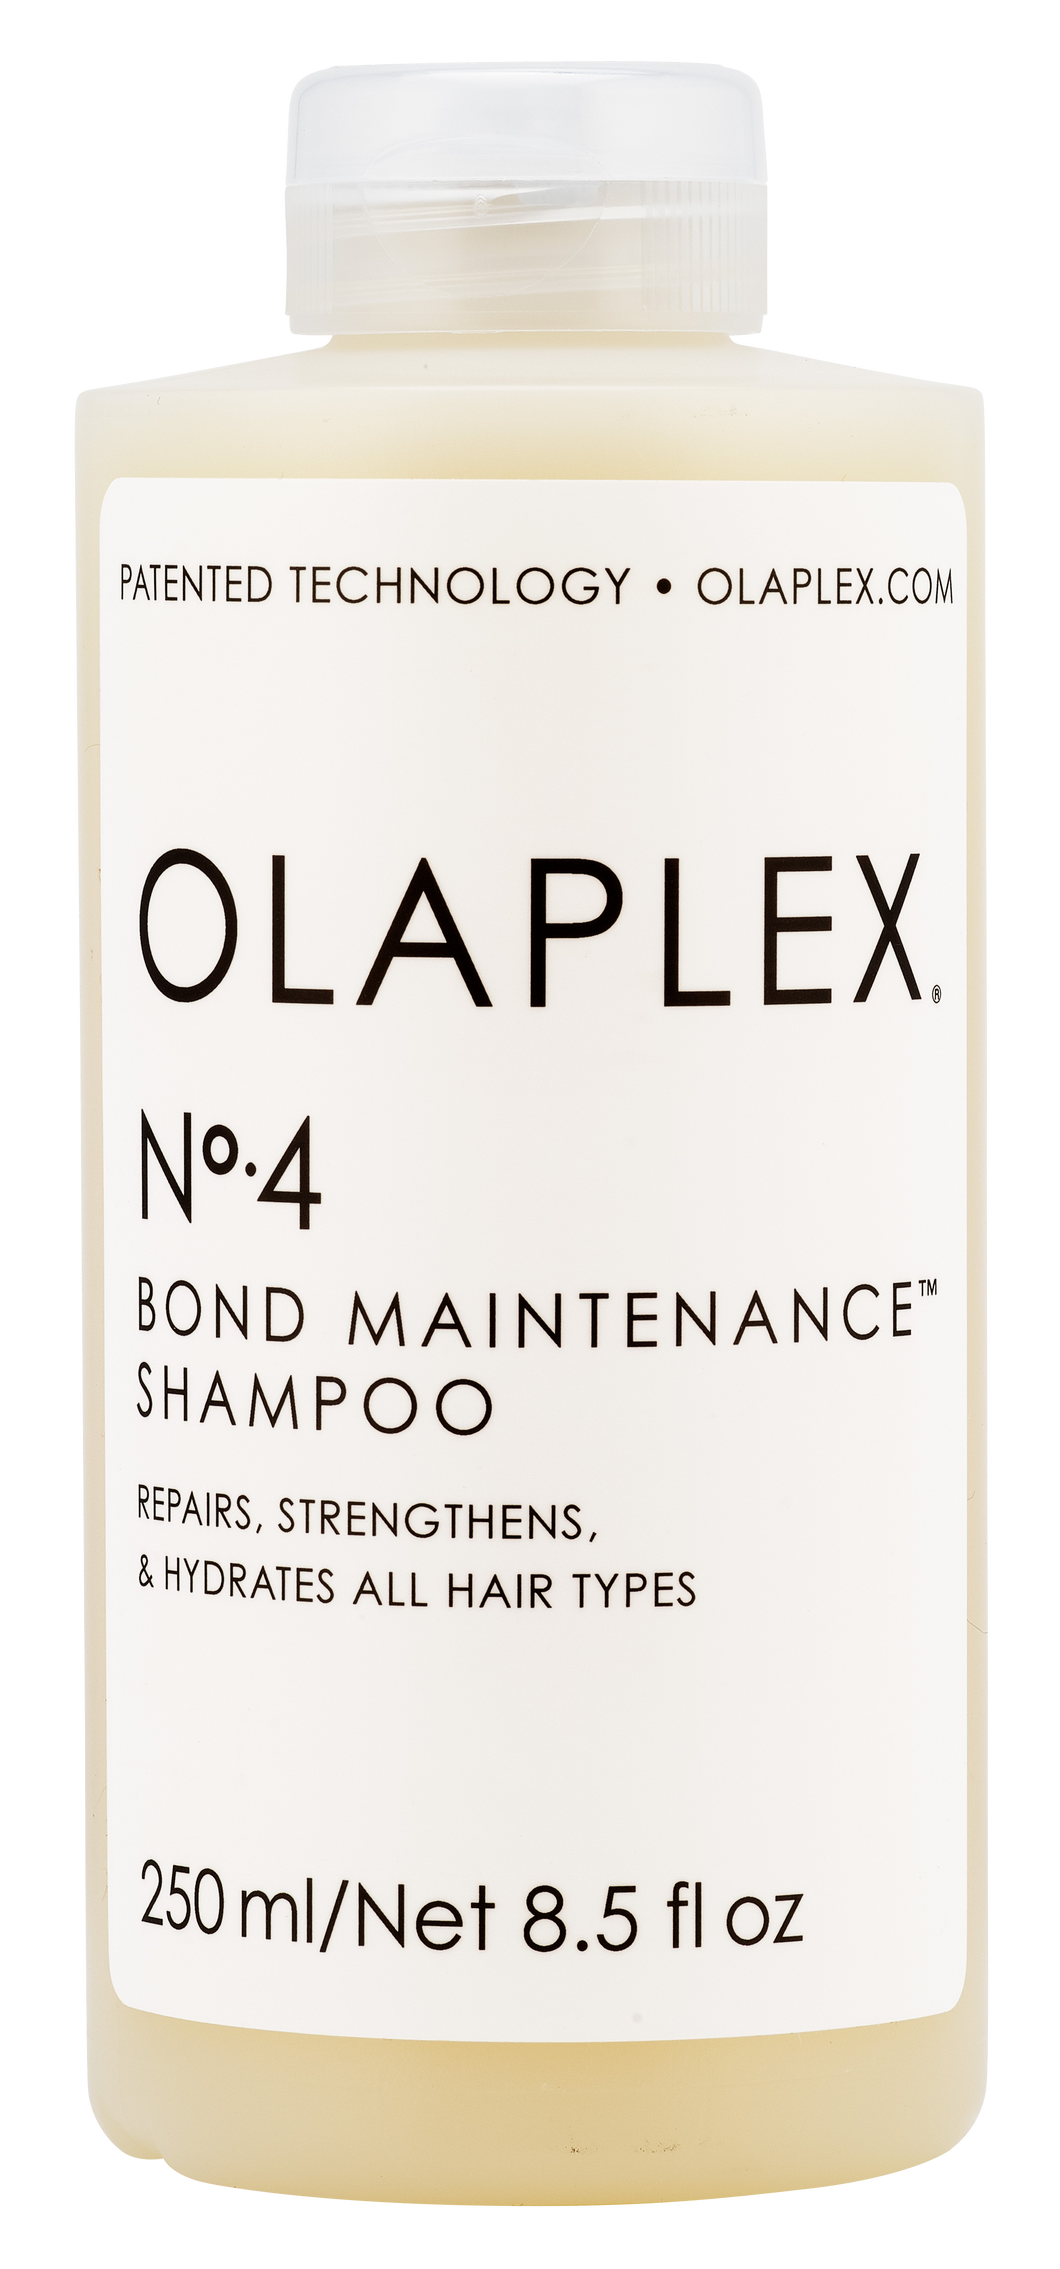 OLAPLEX Nº4 BOND MAINTENANCE SHAMPOO 250ML